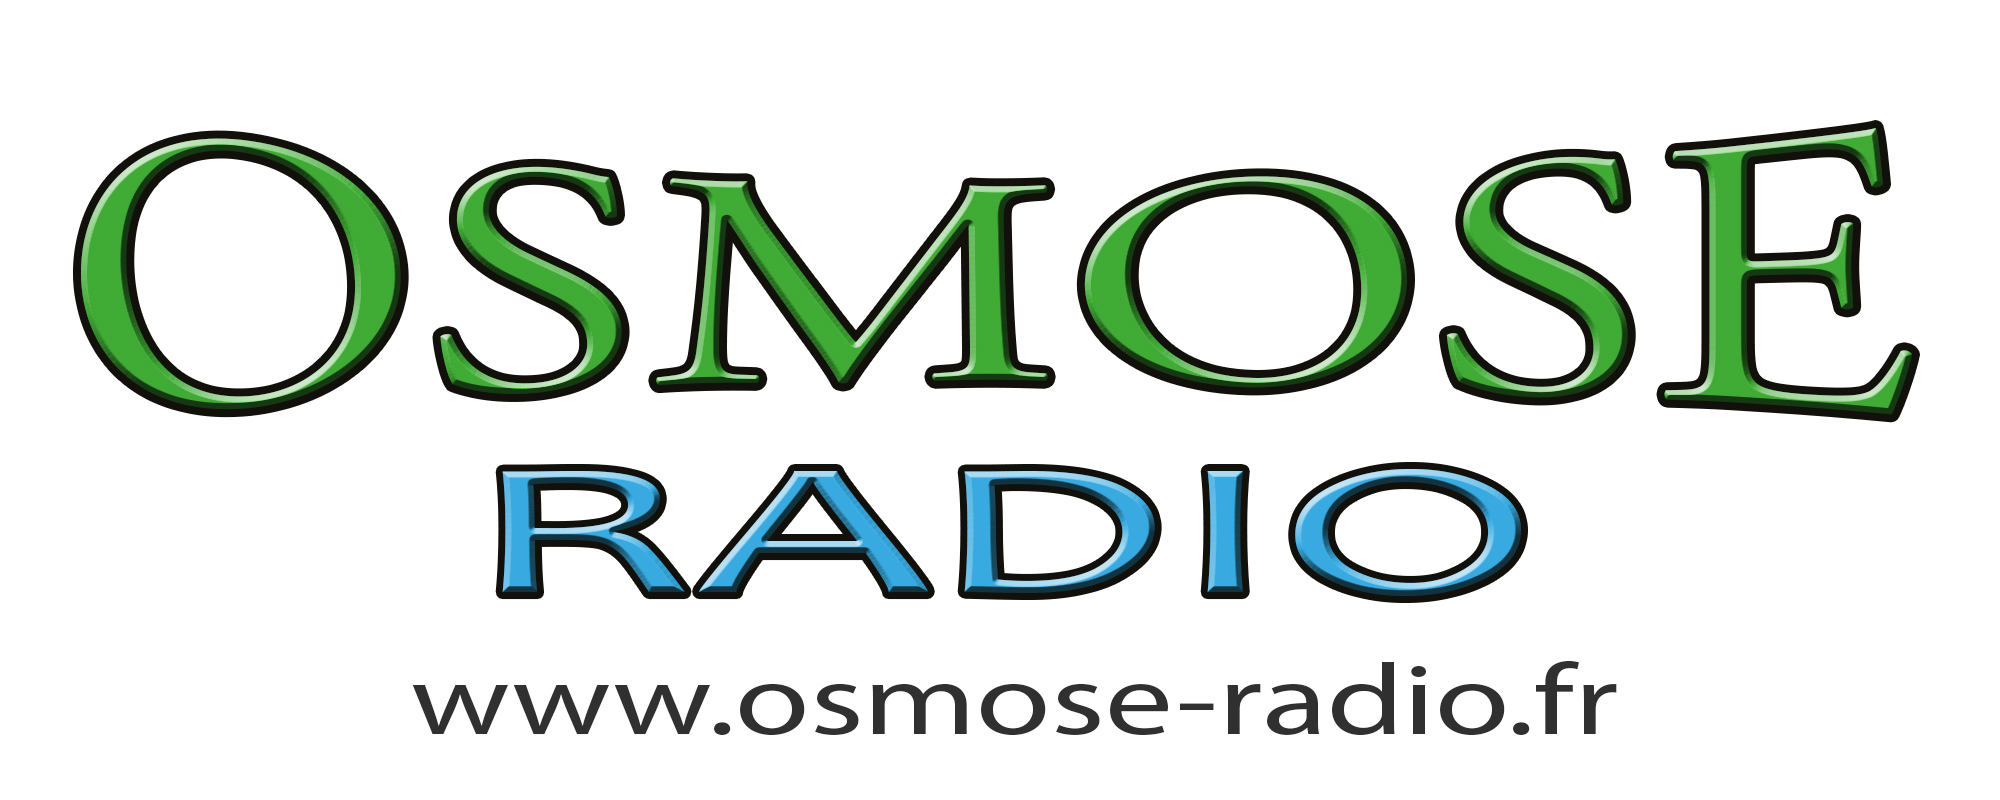 Osmose radio